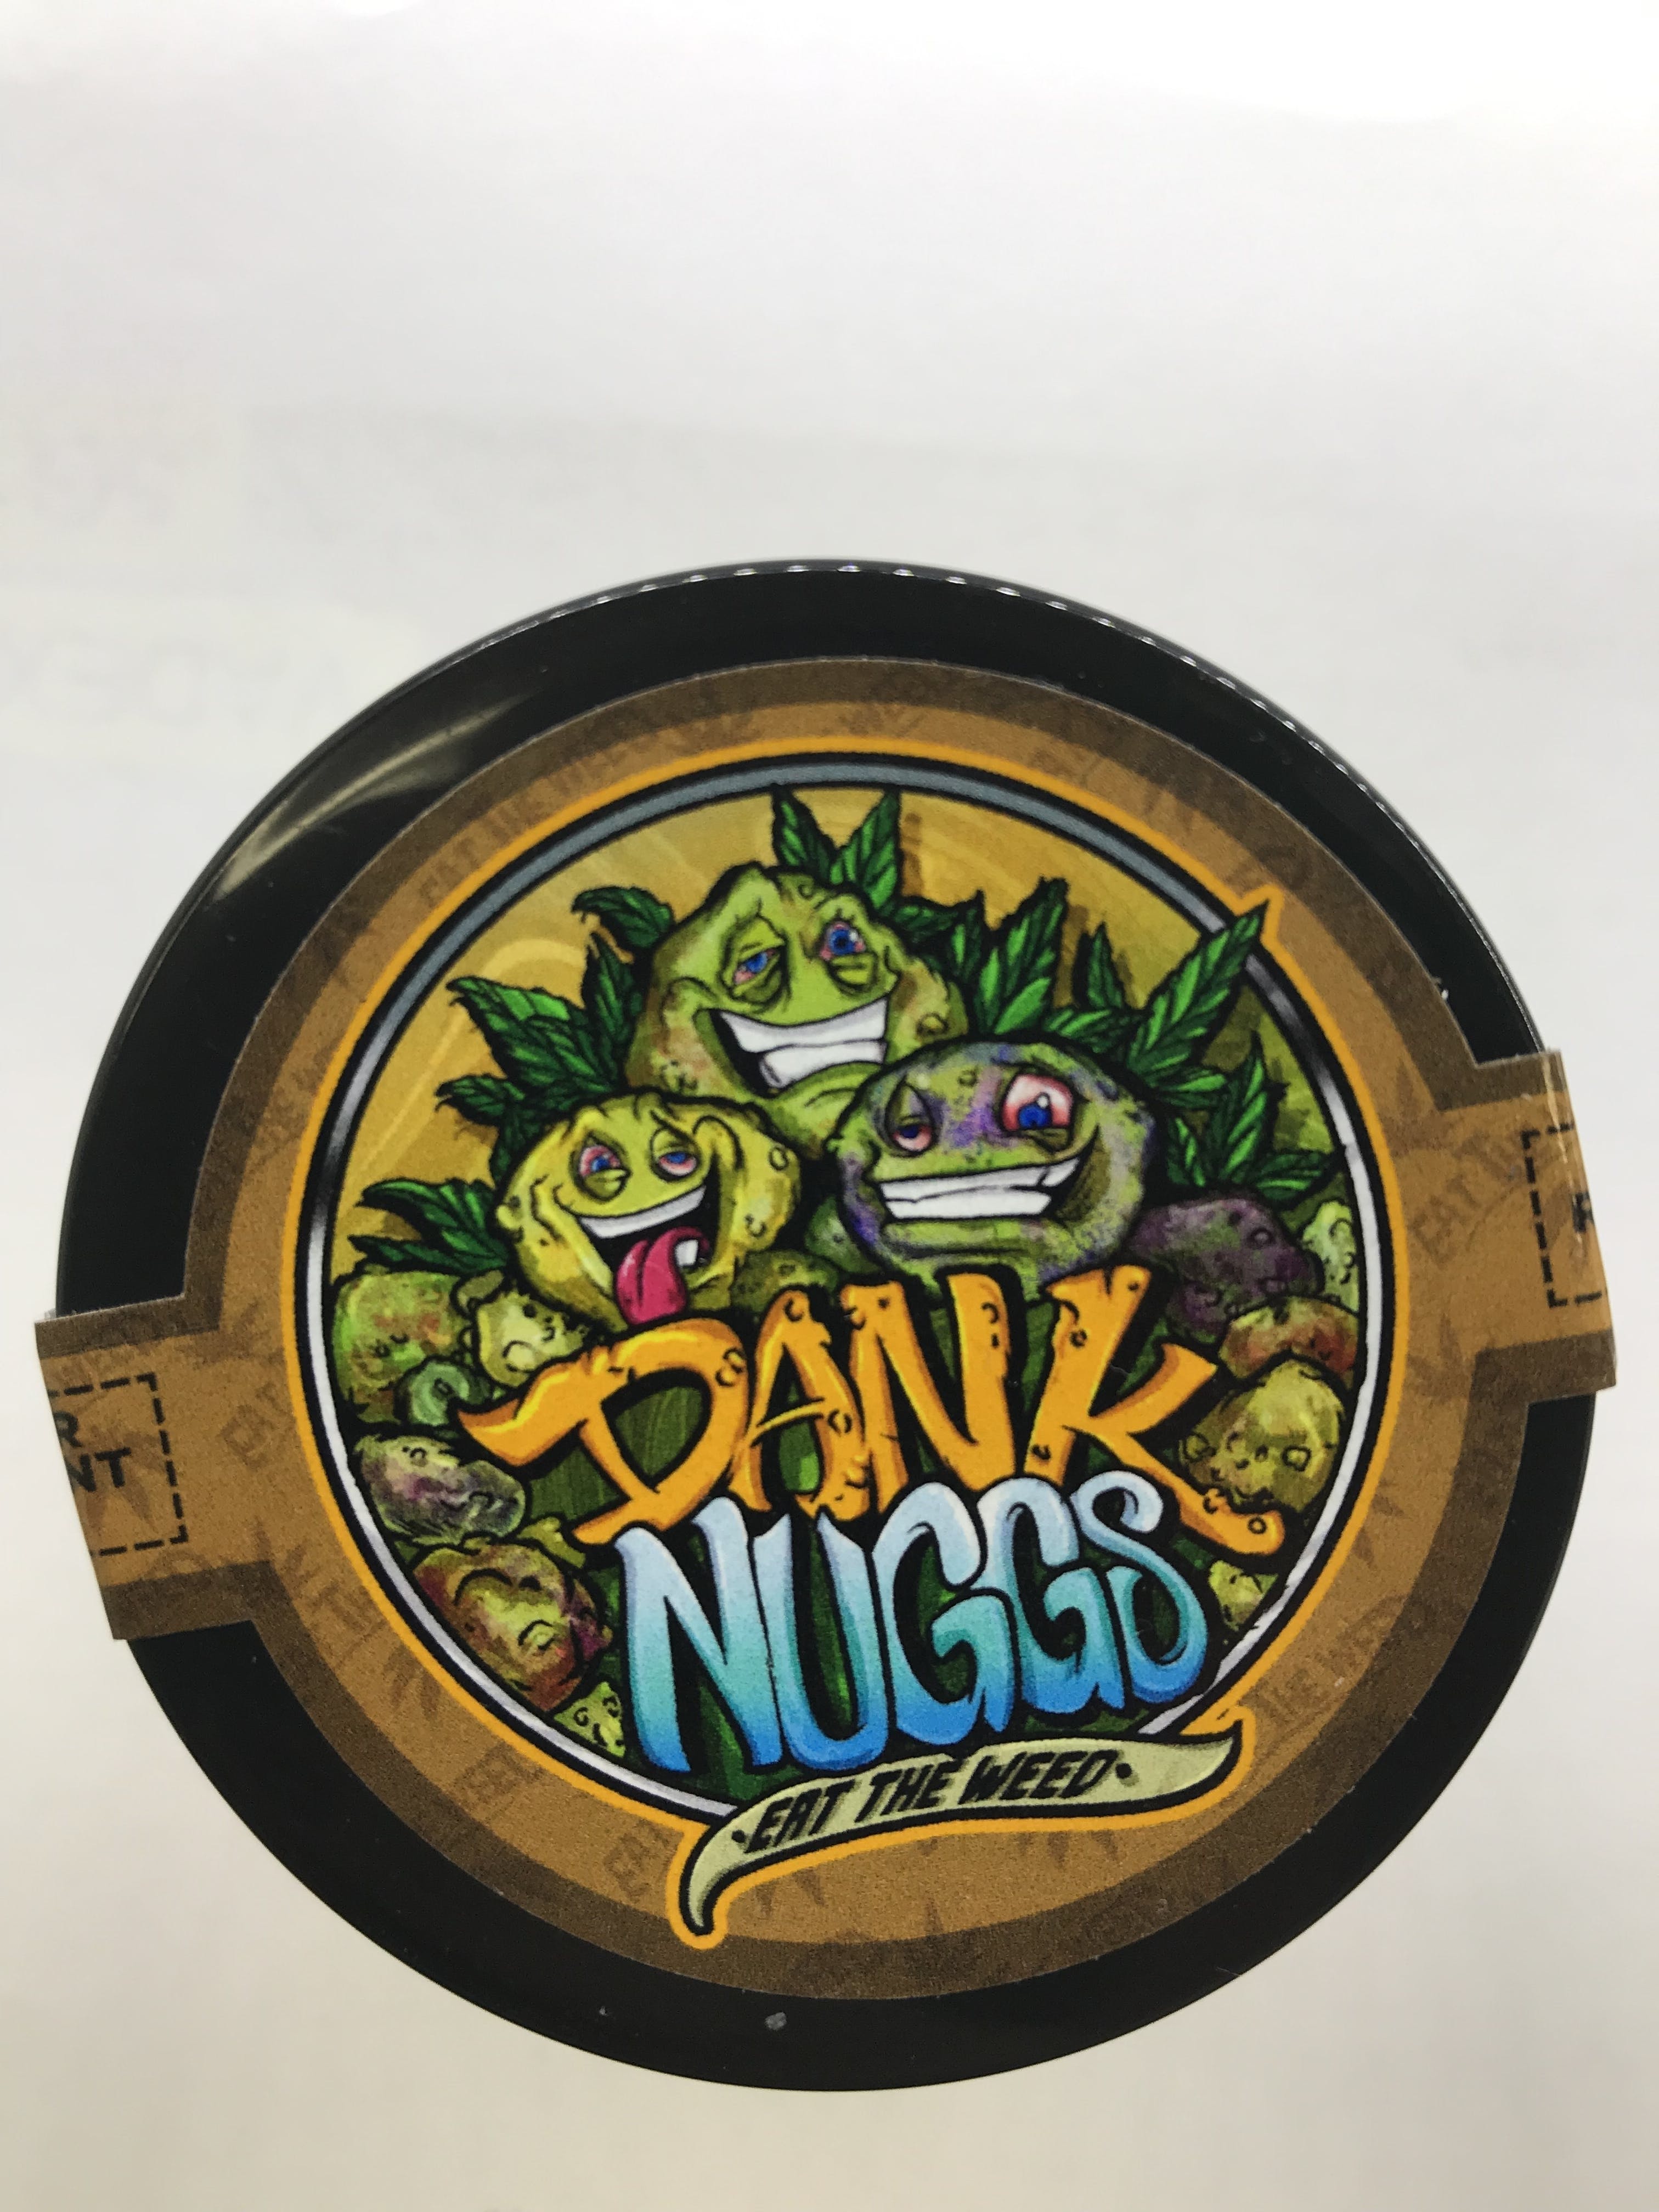 edible-dank-nuggs-350-mg